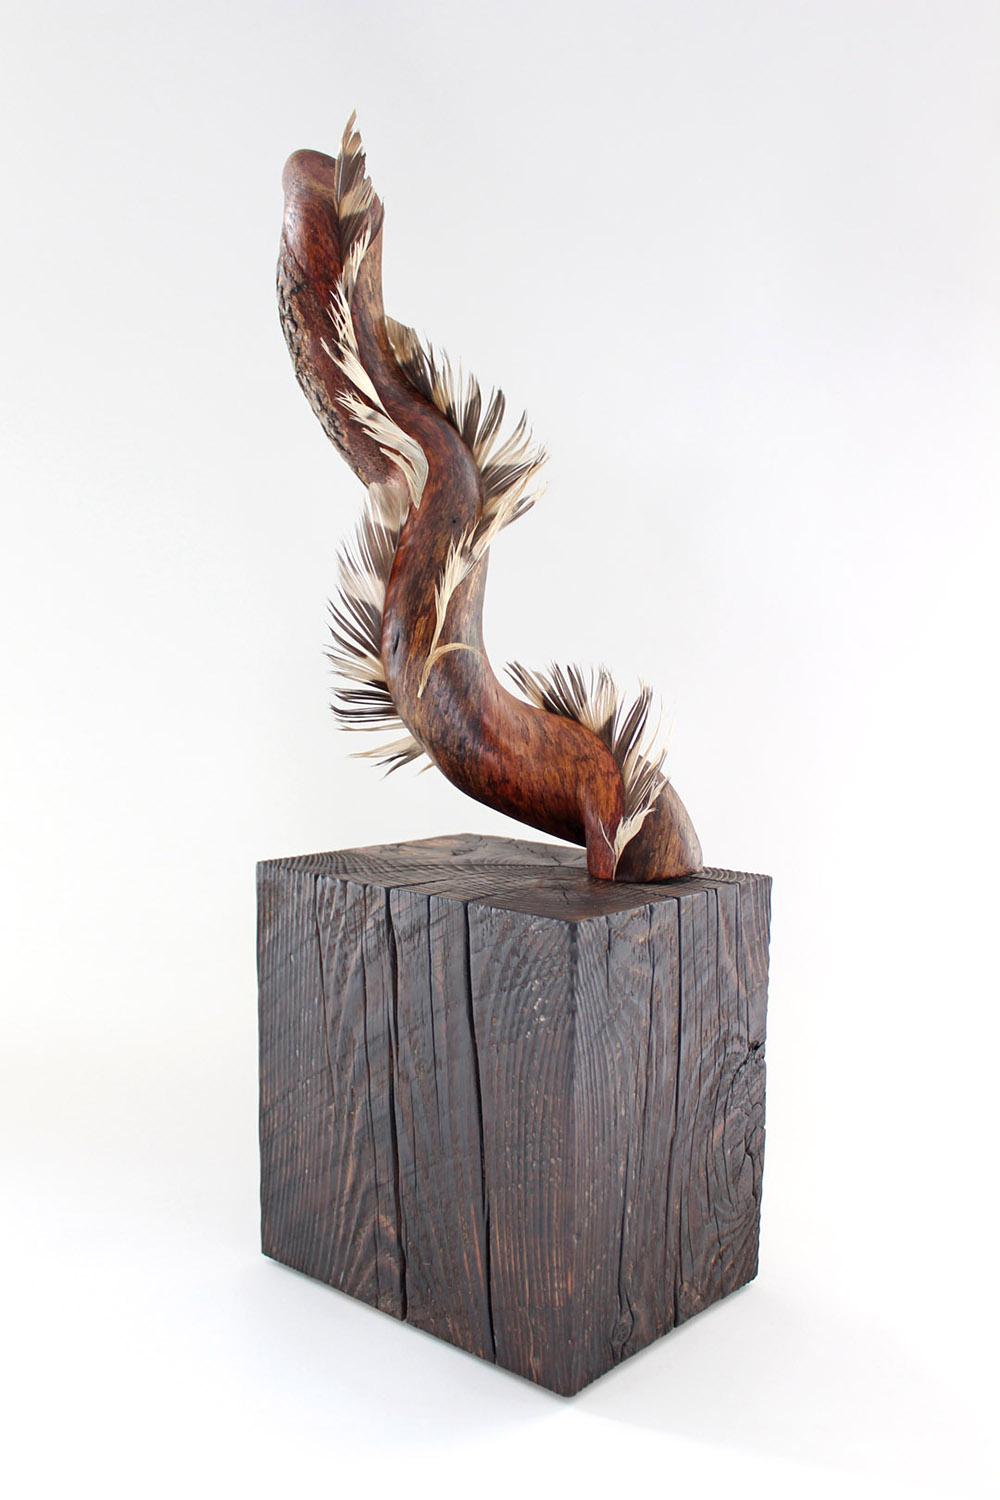 Miller Opie Abstract Sculpture - "Whisking Dream", sculpture, wood, white oak, feather, hemlock, brown, red